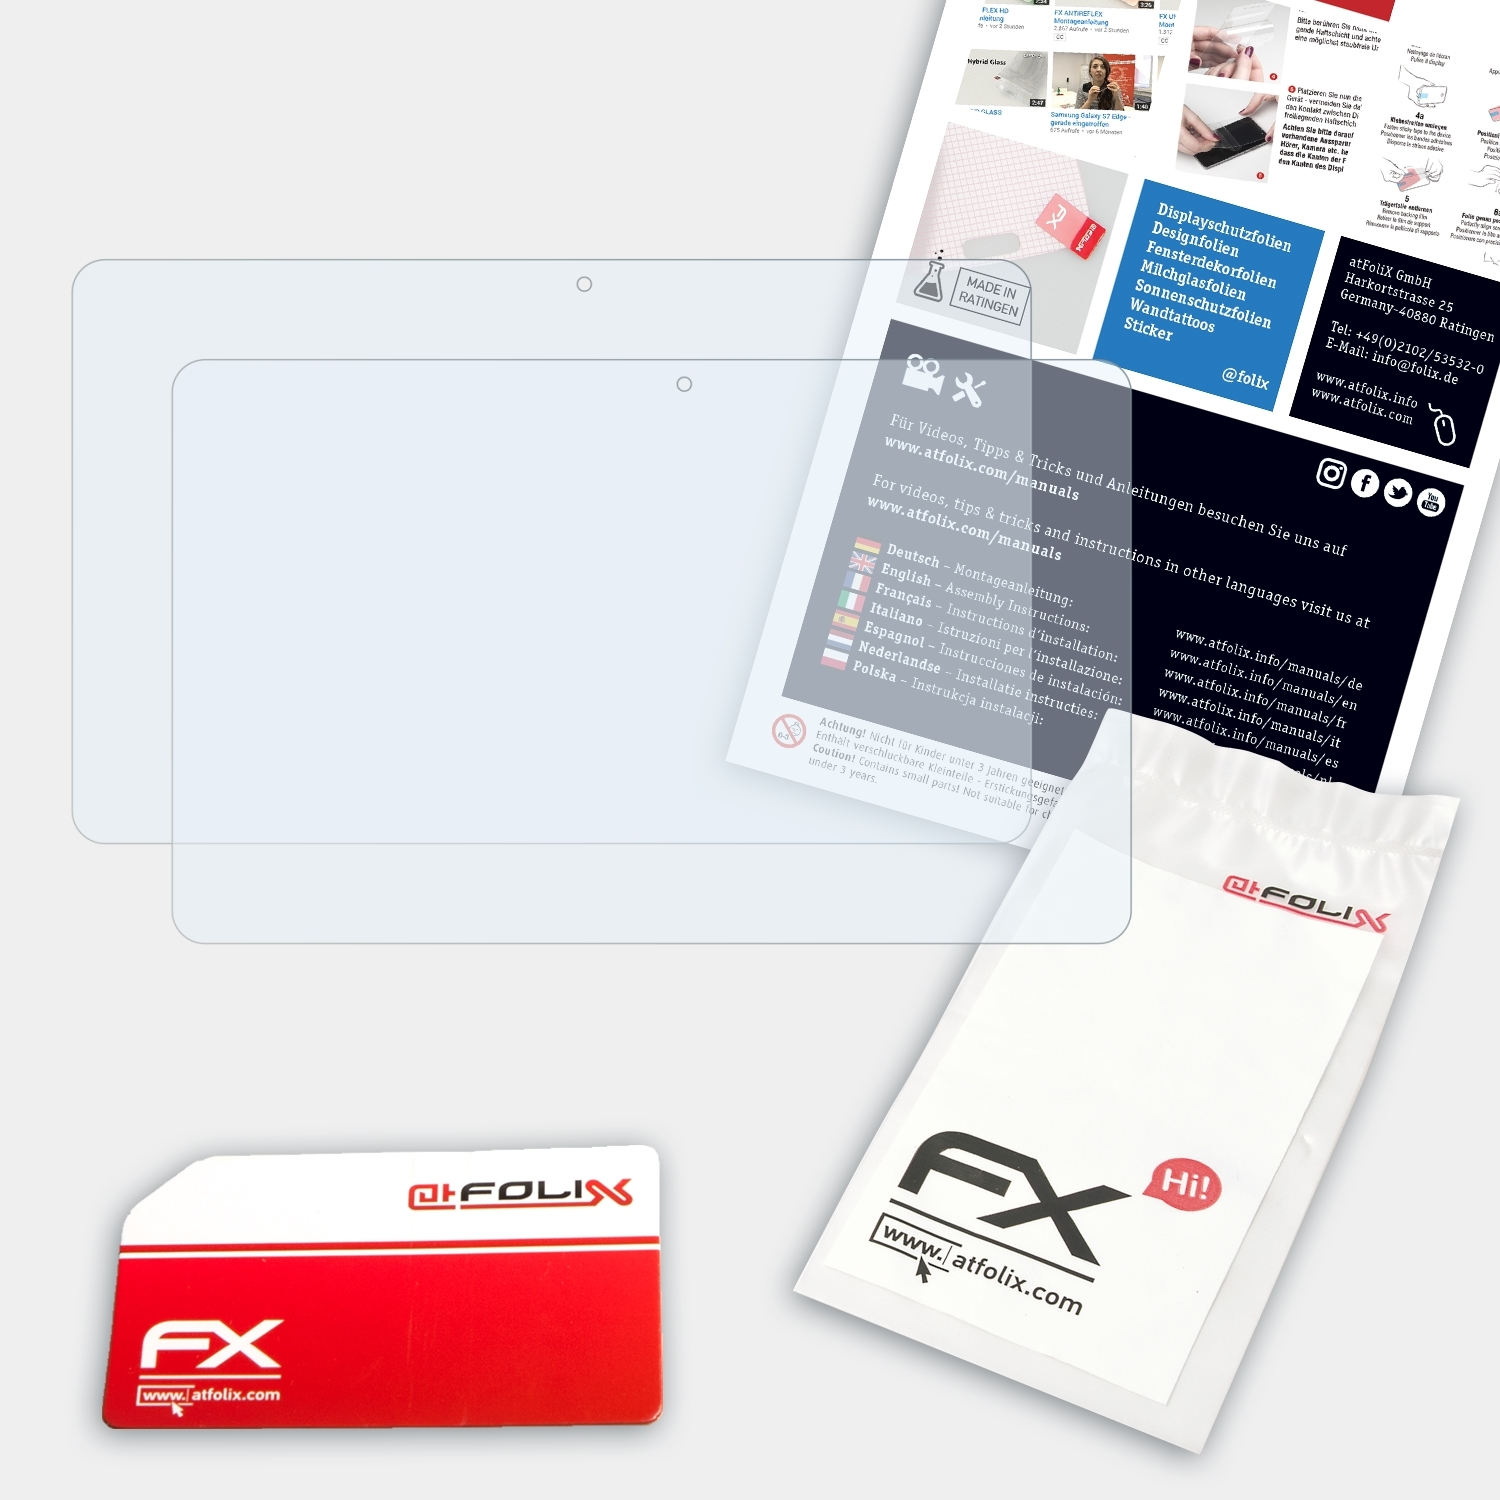 Ieos FX-Clear Odys Pro) ATFOLIX 10 Quad Displayschutz(für 2x